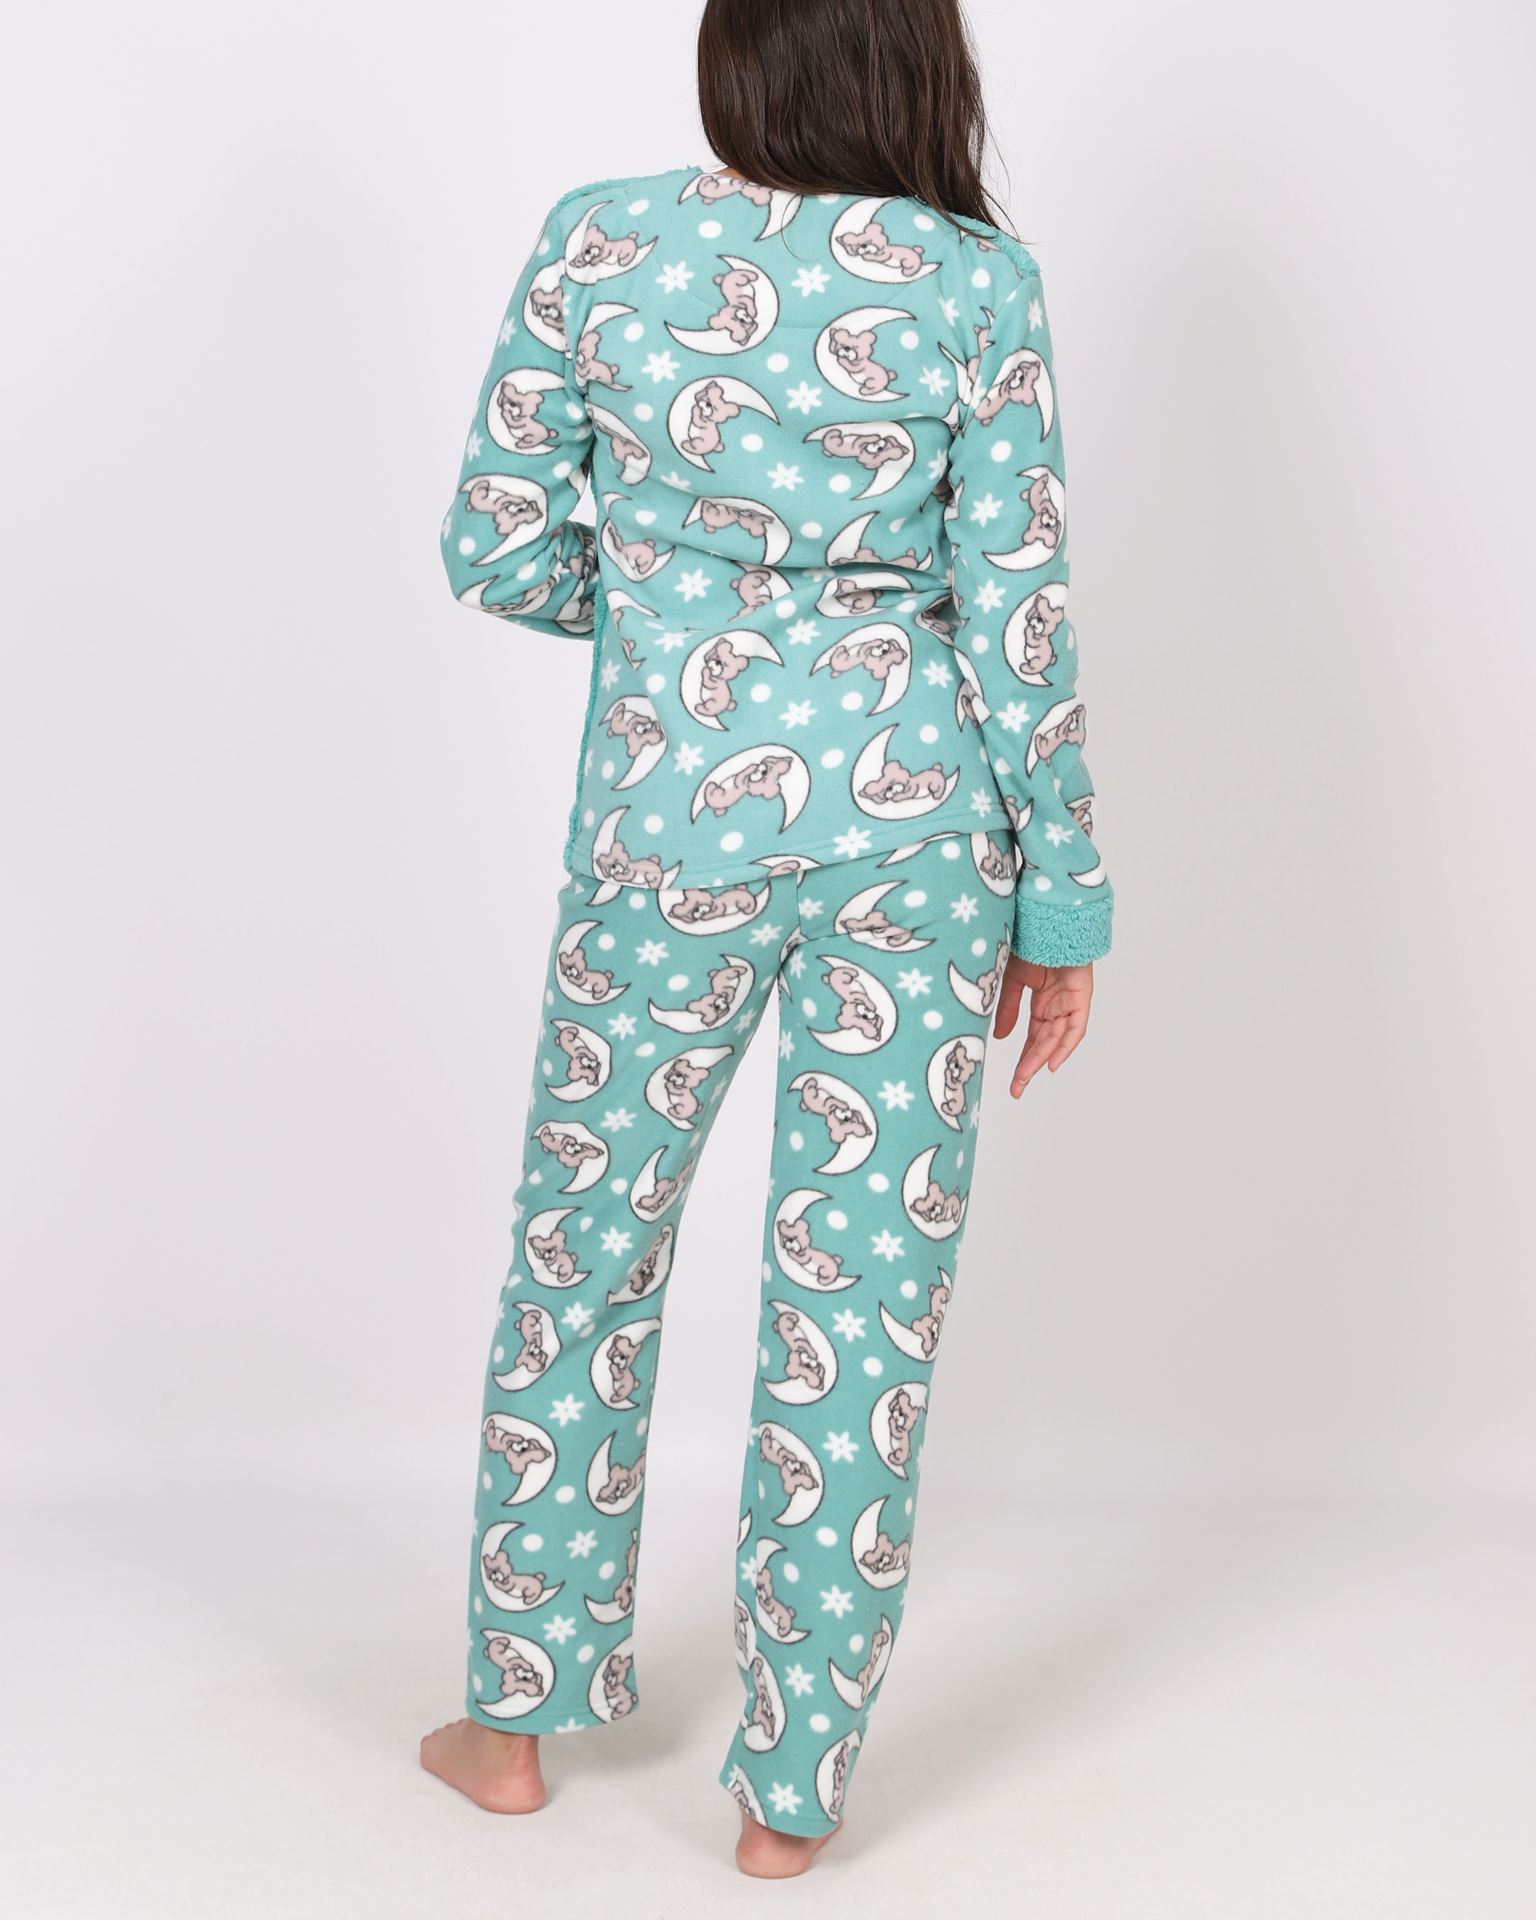 Welsoft Garnili Polar Pijama Takımı PJM1783